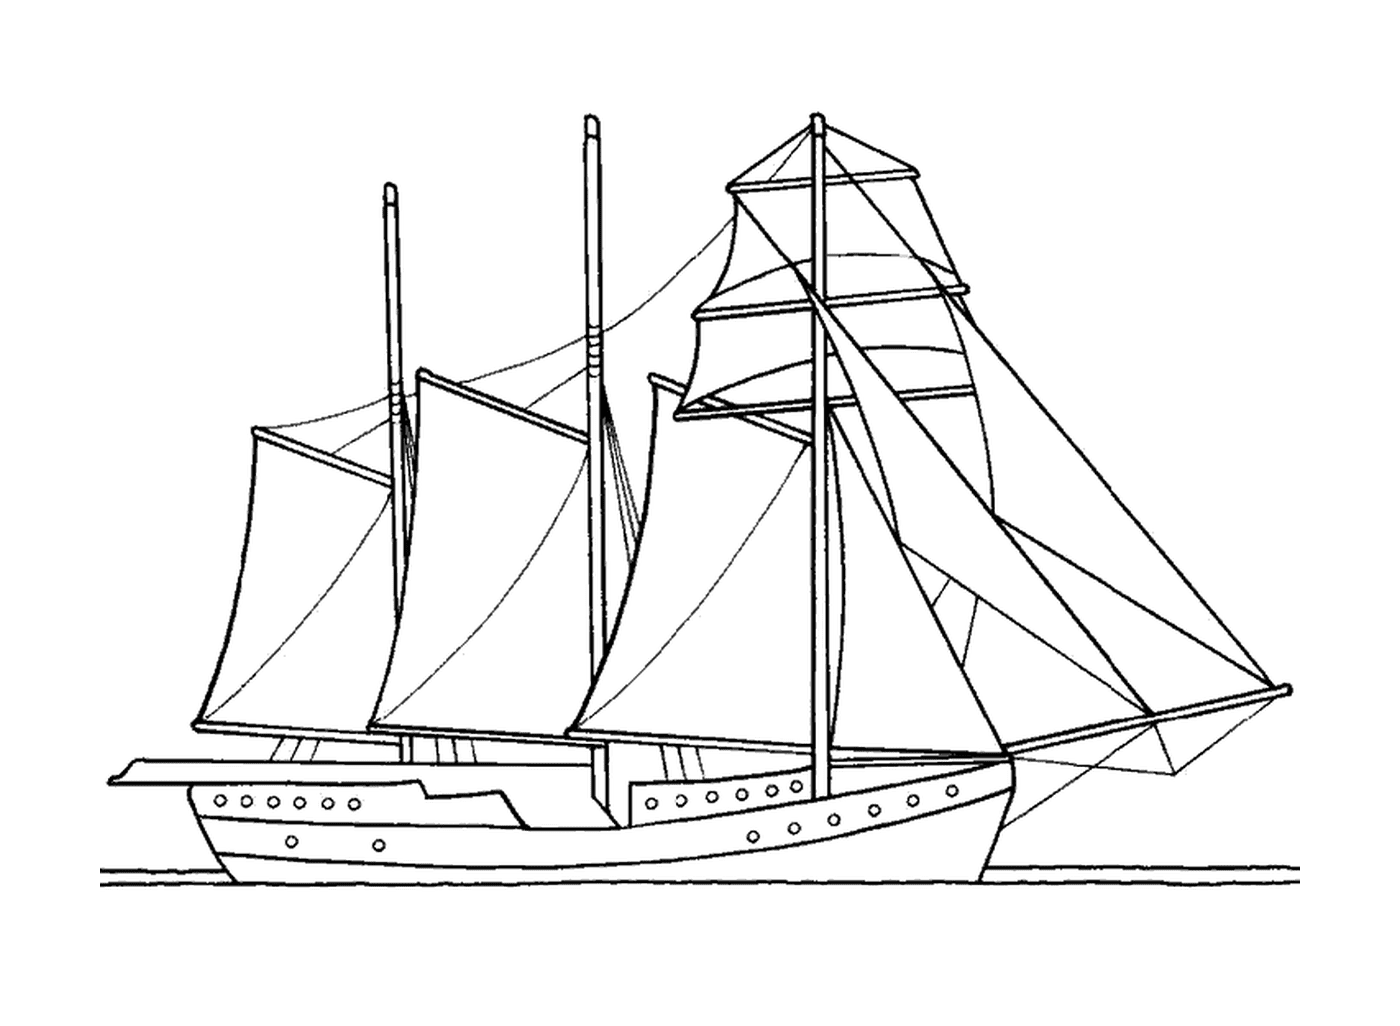  A three-pole sailboat 